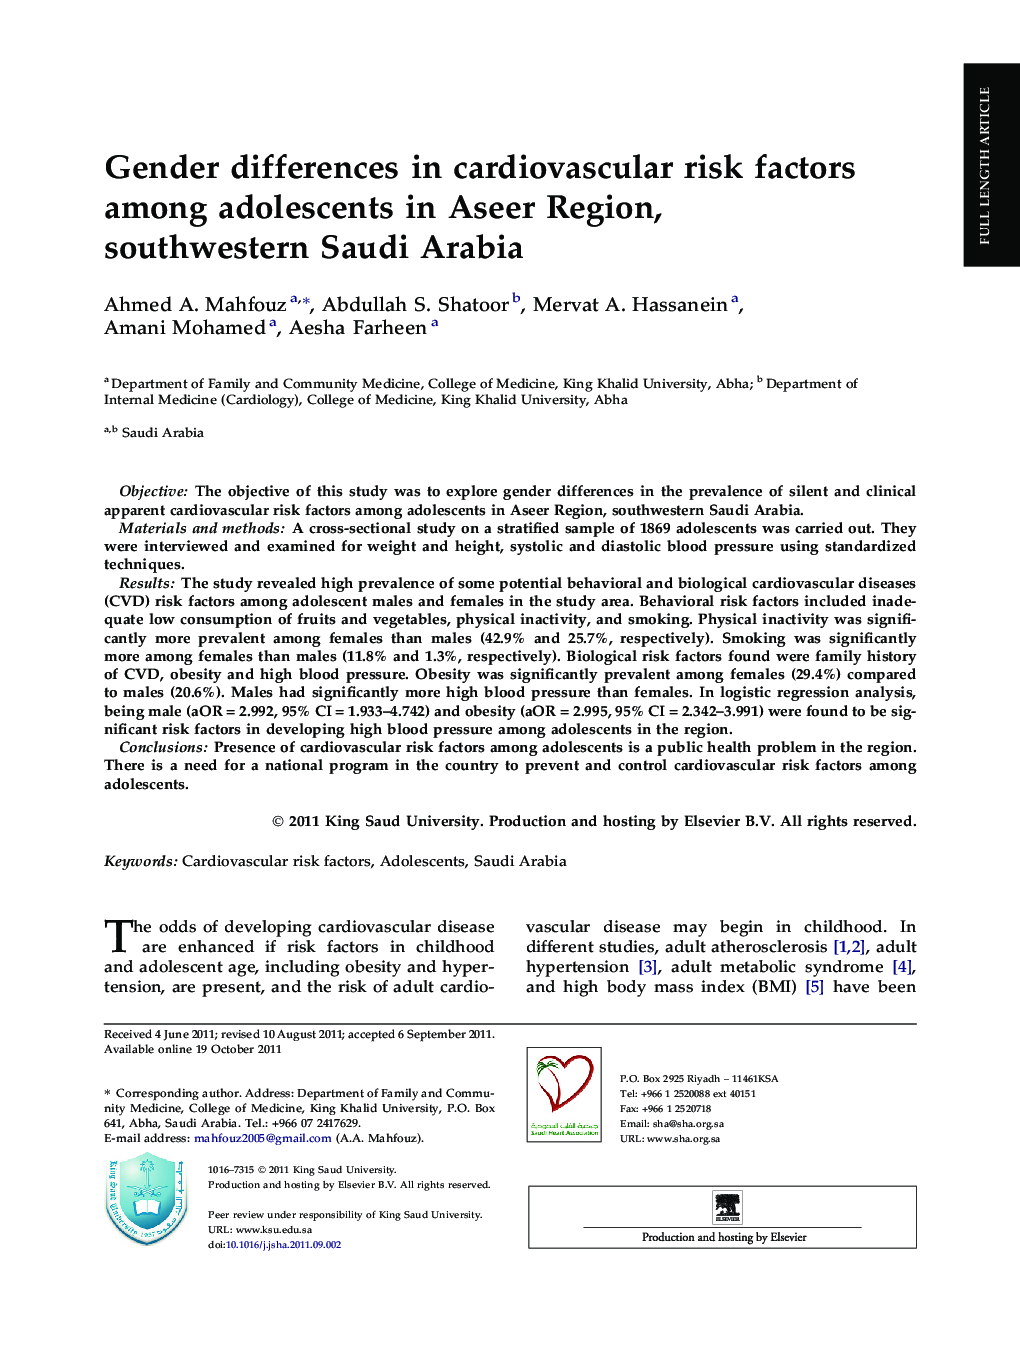 Gender differences in cardiovascular risk factors among adolescents in Aseer Region, southwestern Saudi Arabia